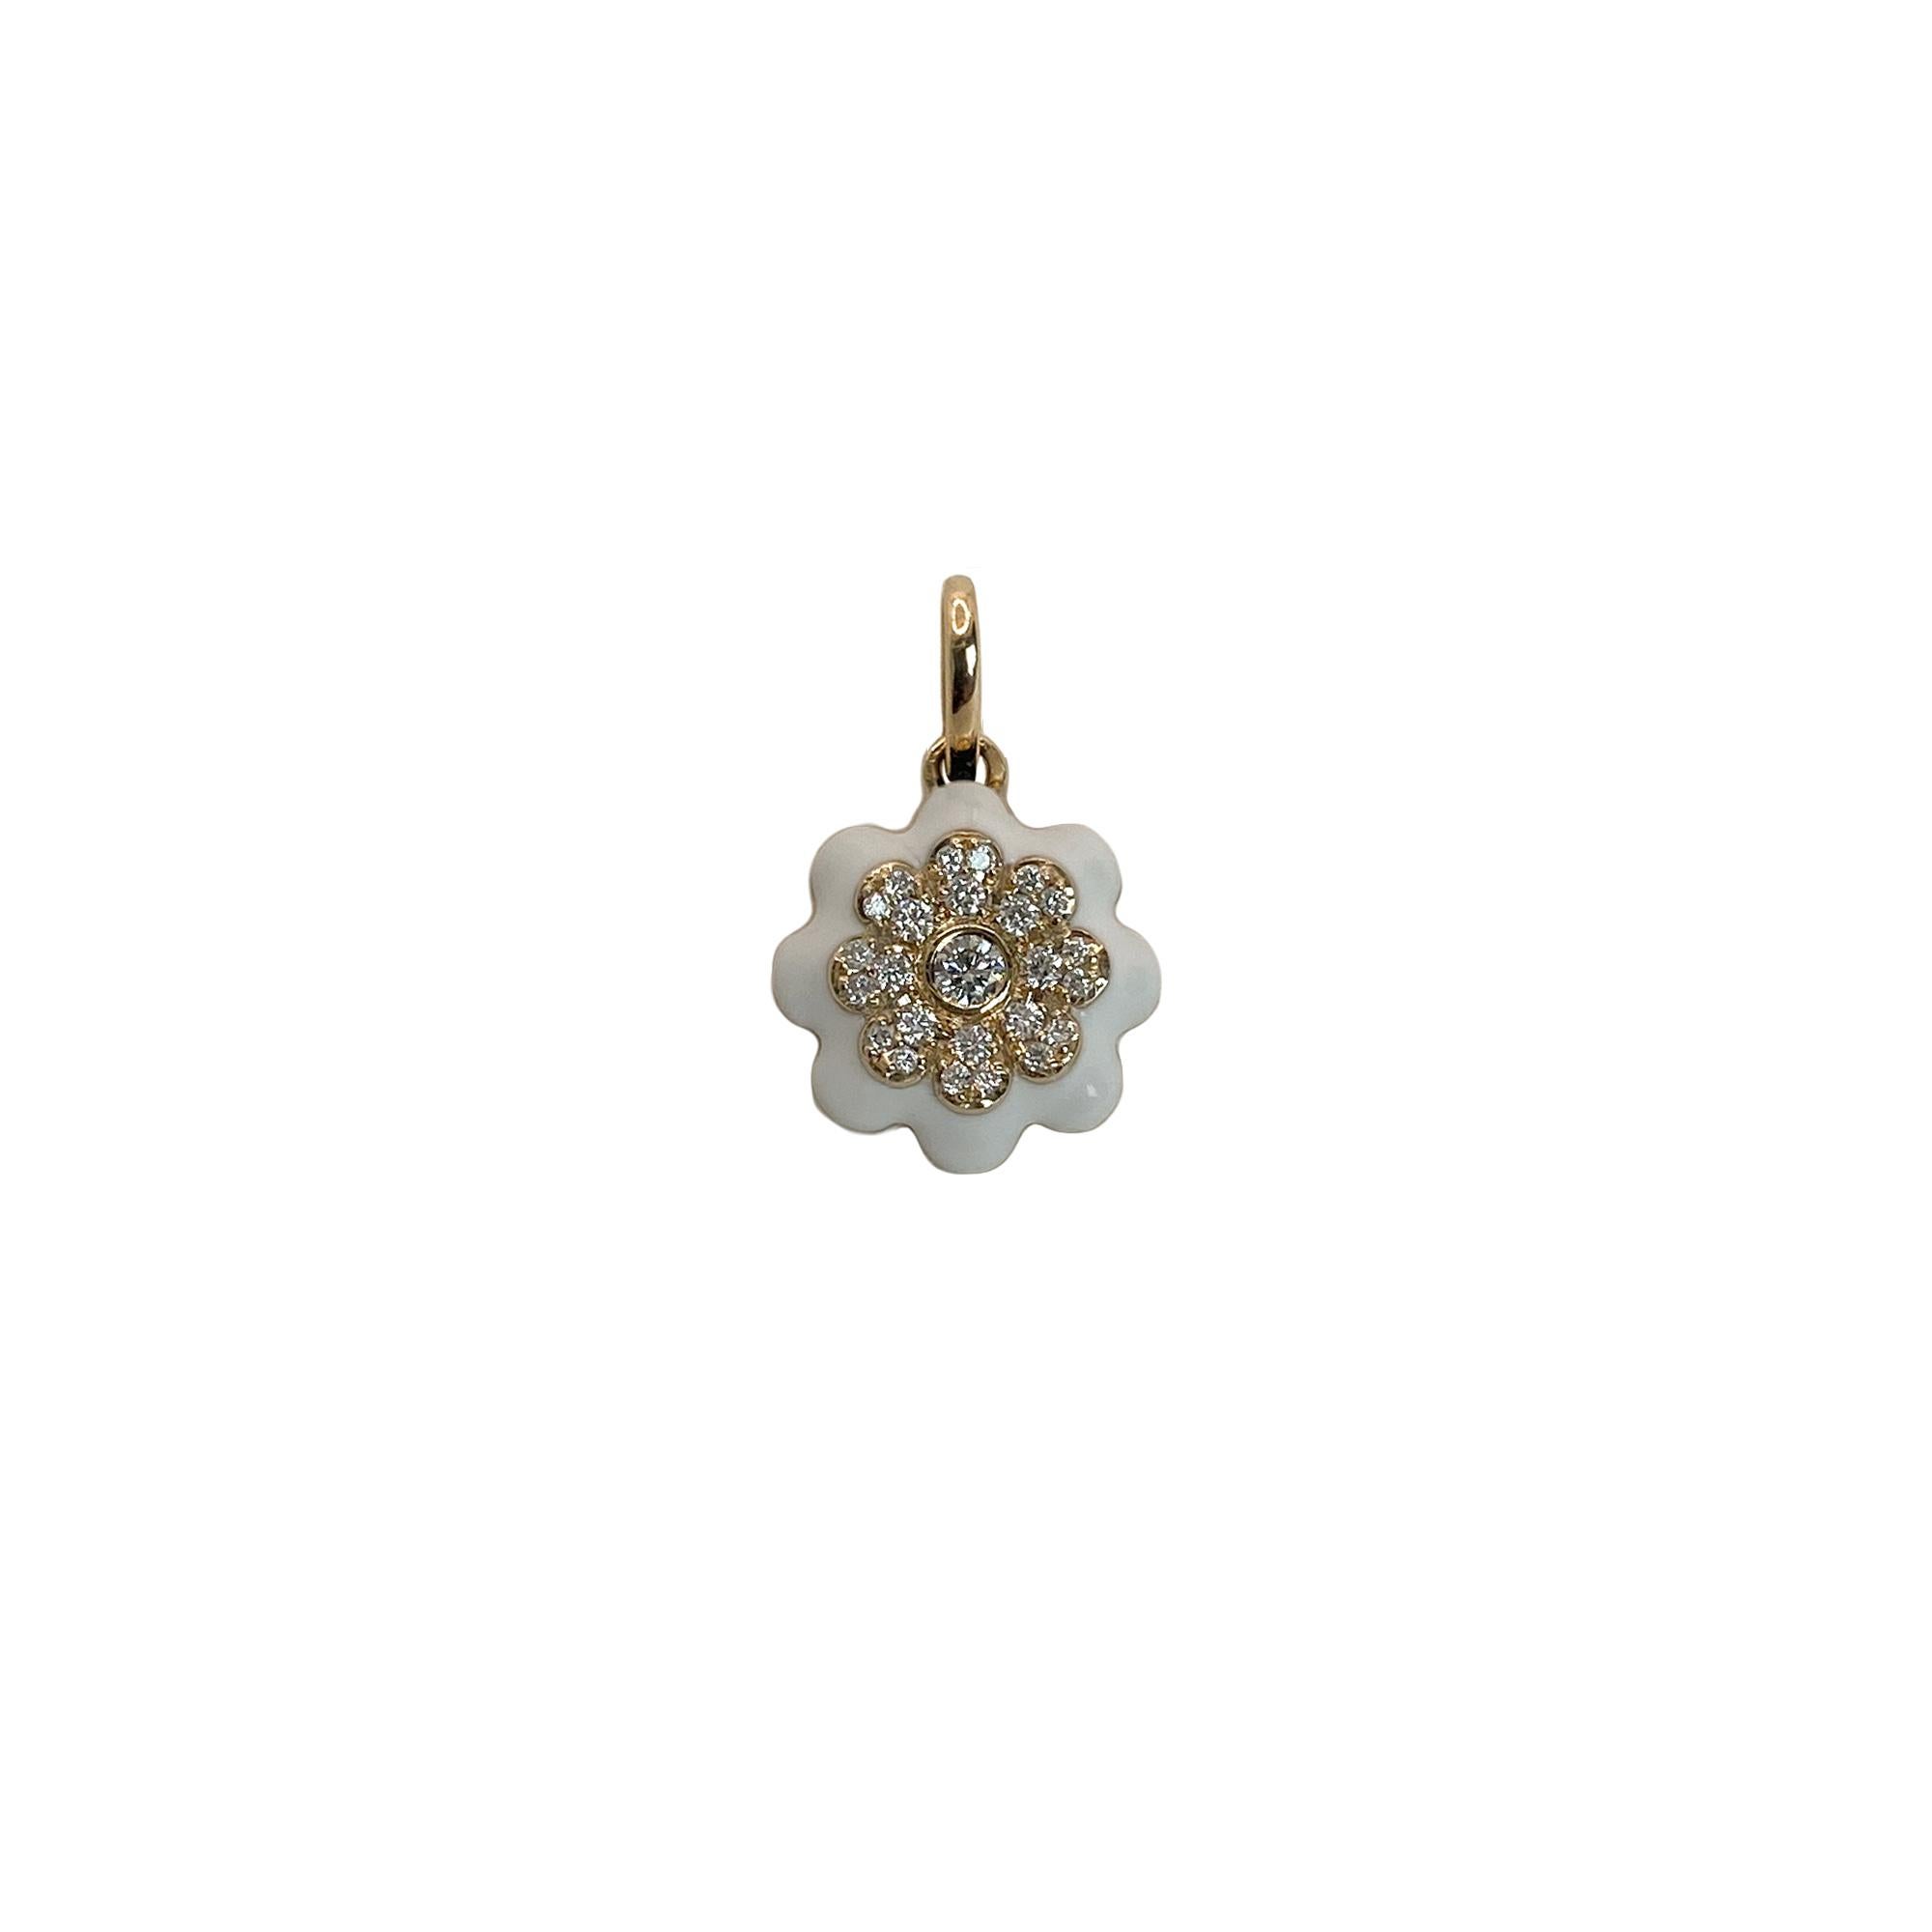 Memento Diamond and White Enamel Flower Charm Pendant For Sale 2